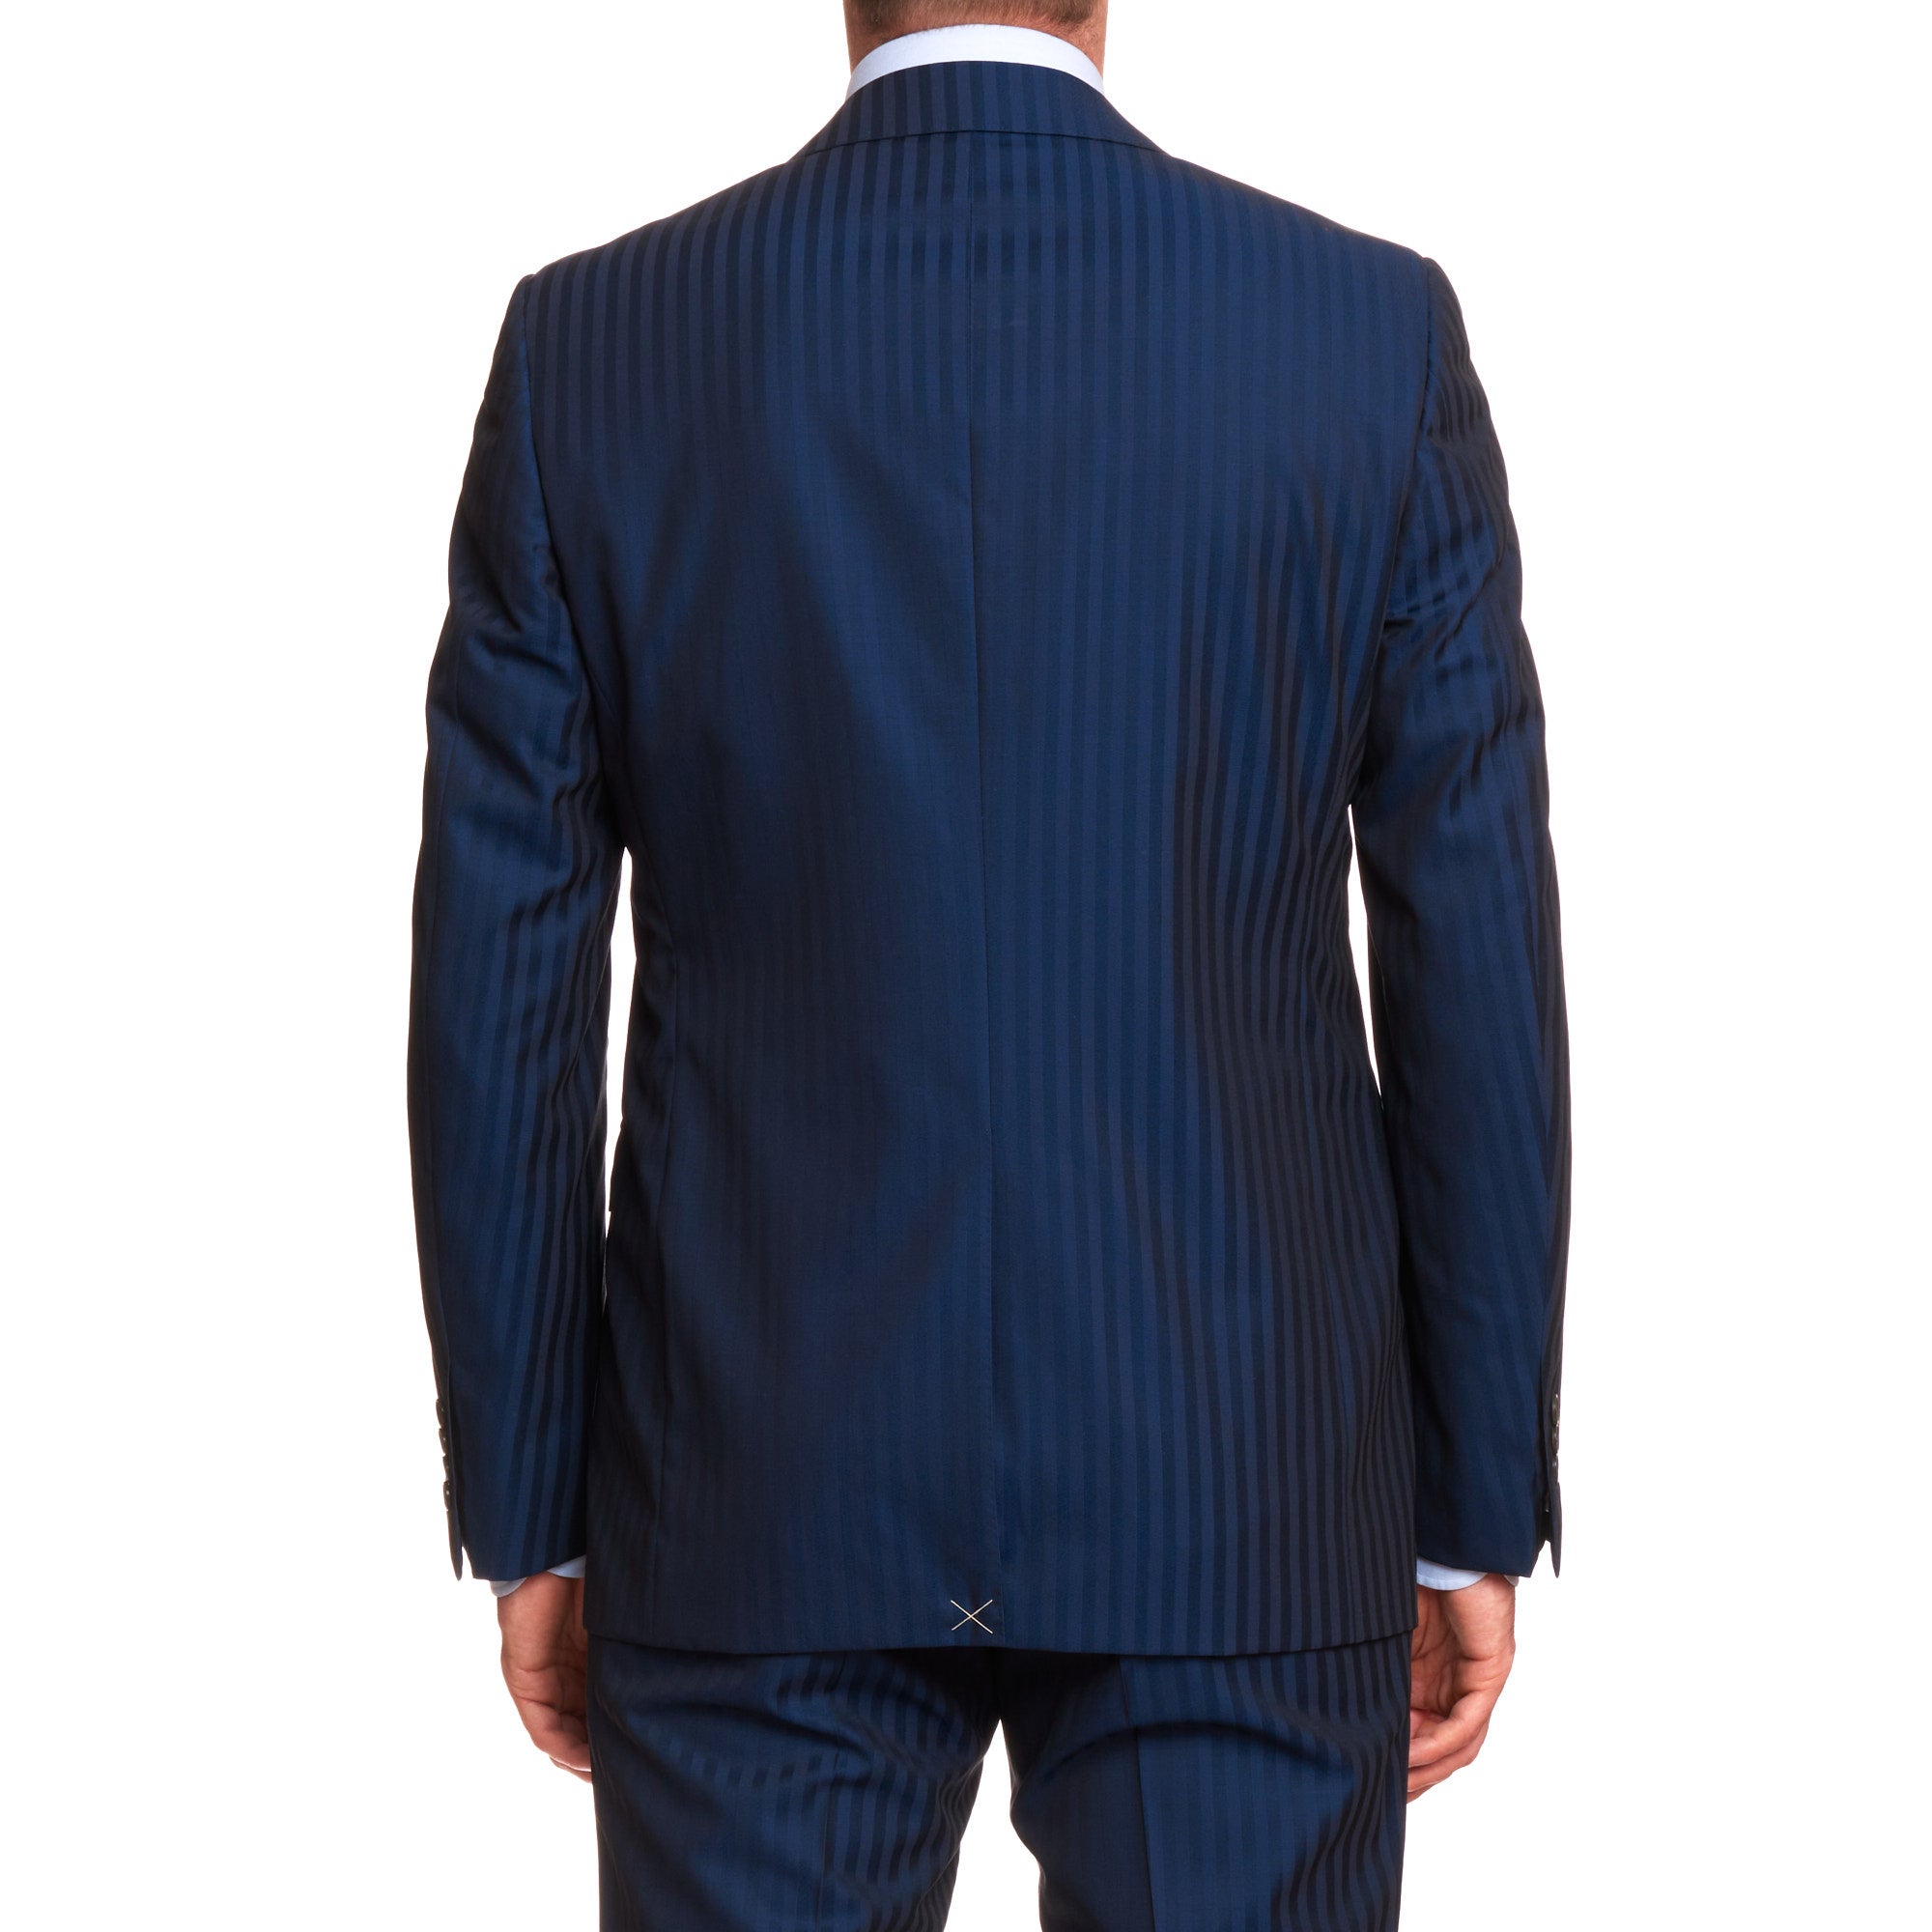 CANALI 1934 Blue Wool 3 Piece Peak Lapel Formal Suit EU 50 US 40 Regular Slim Fit Cut CANALI